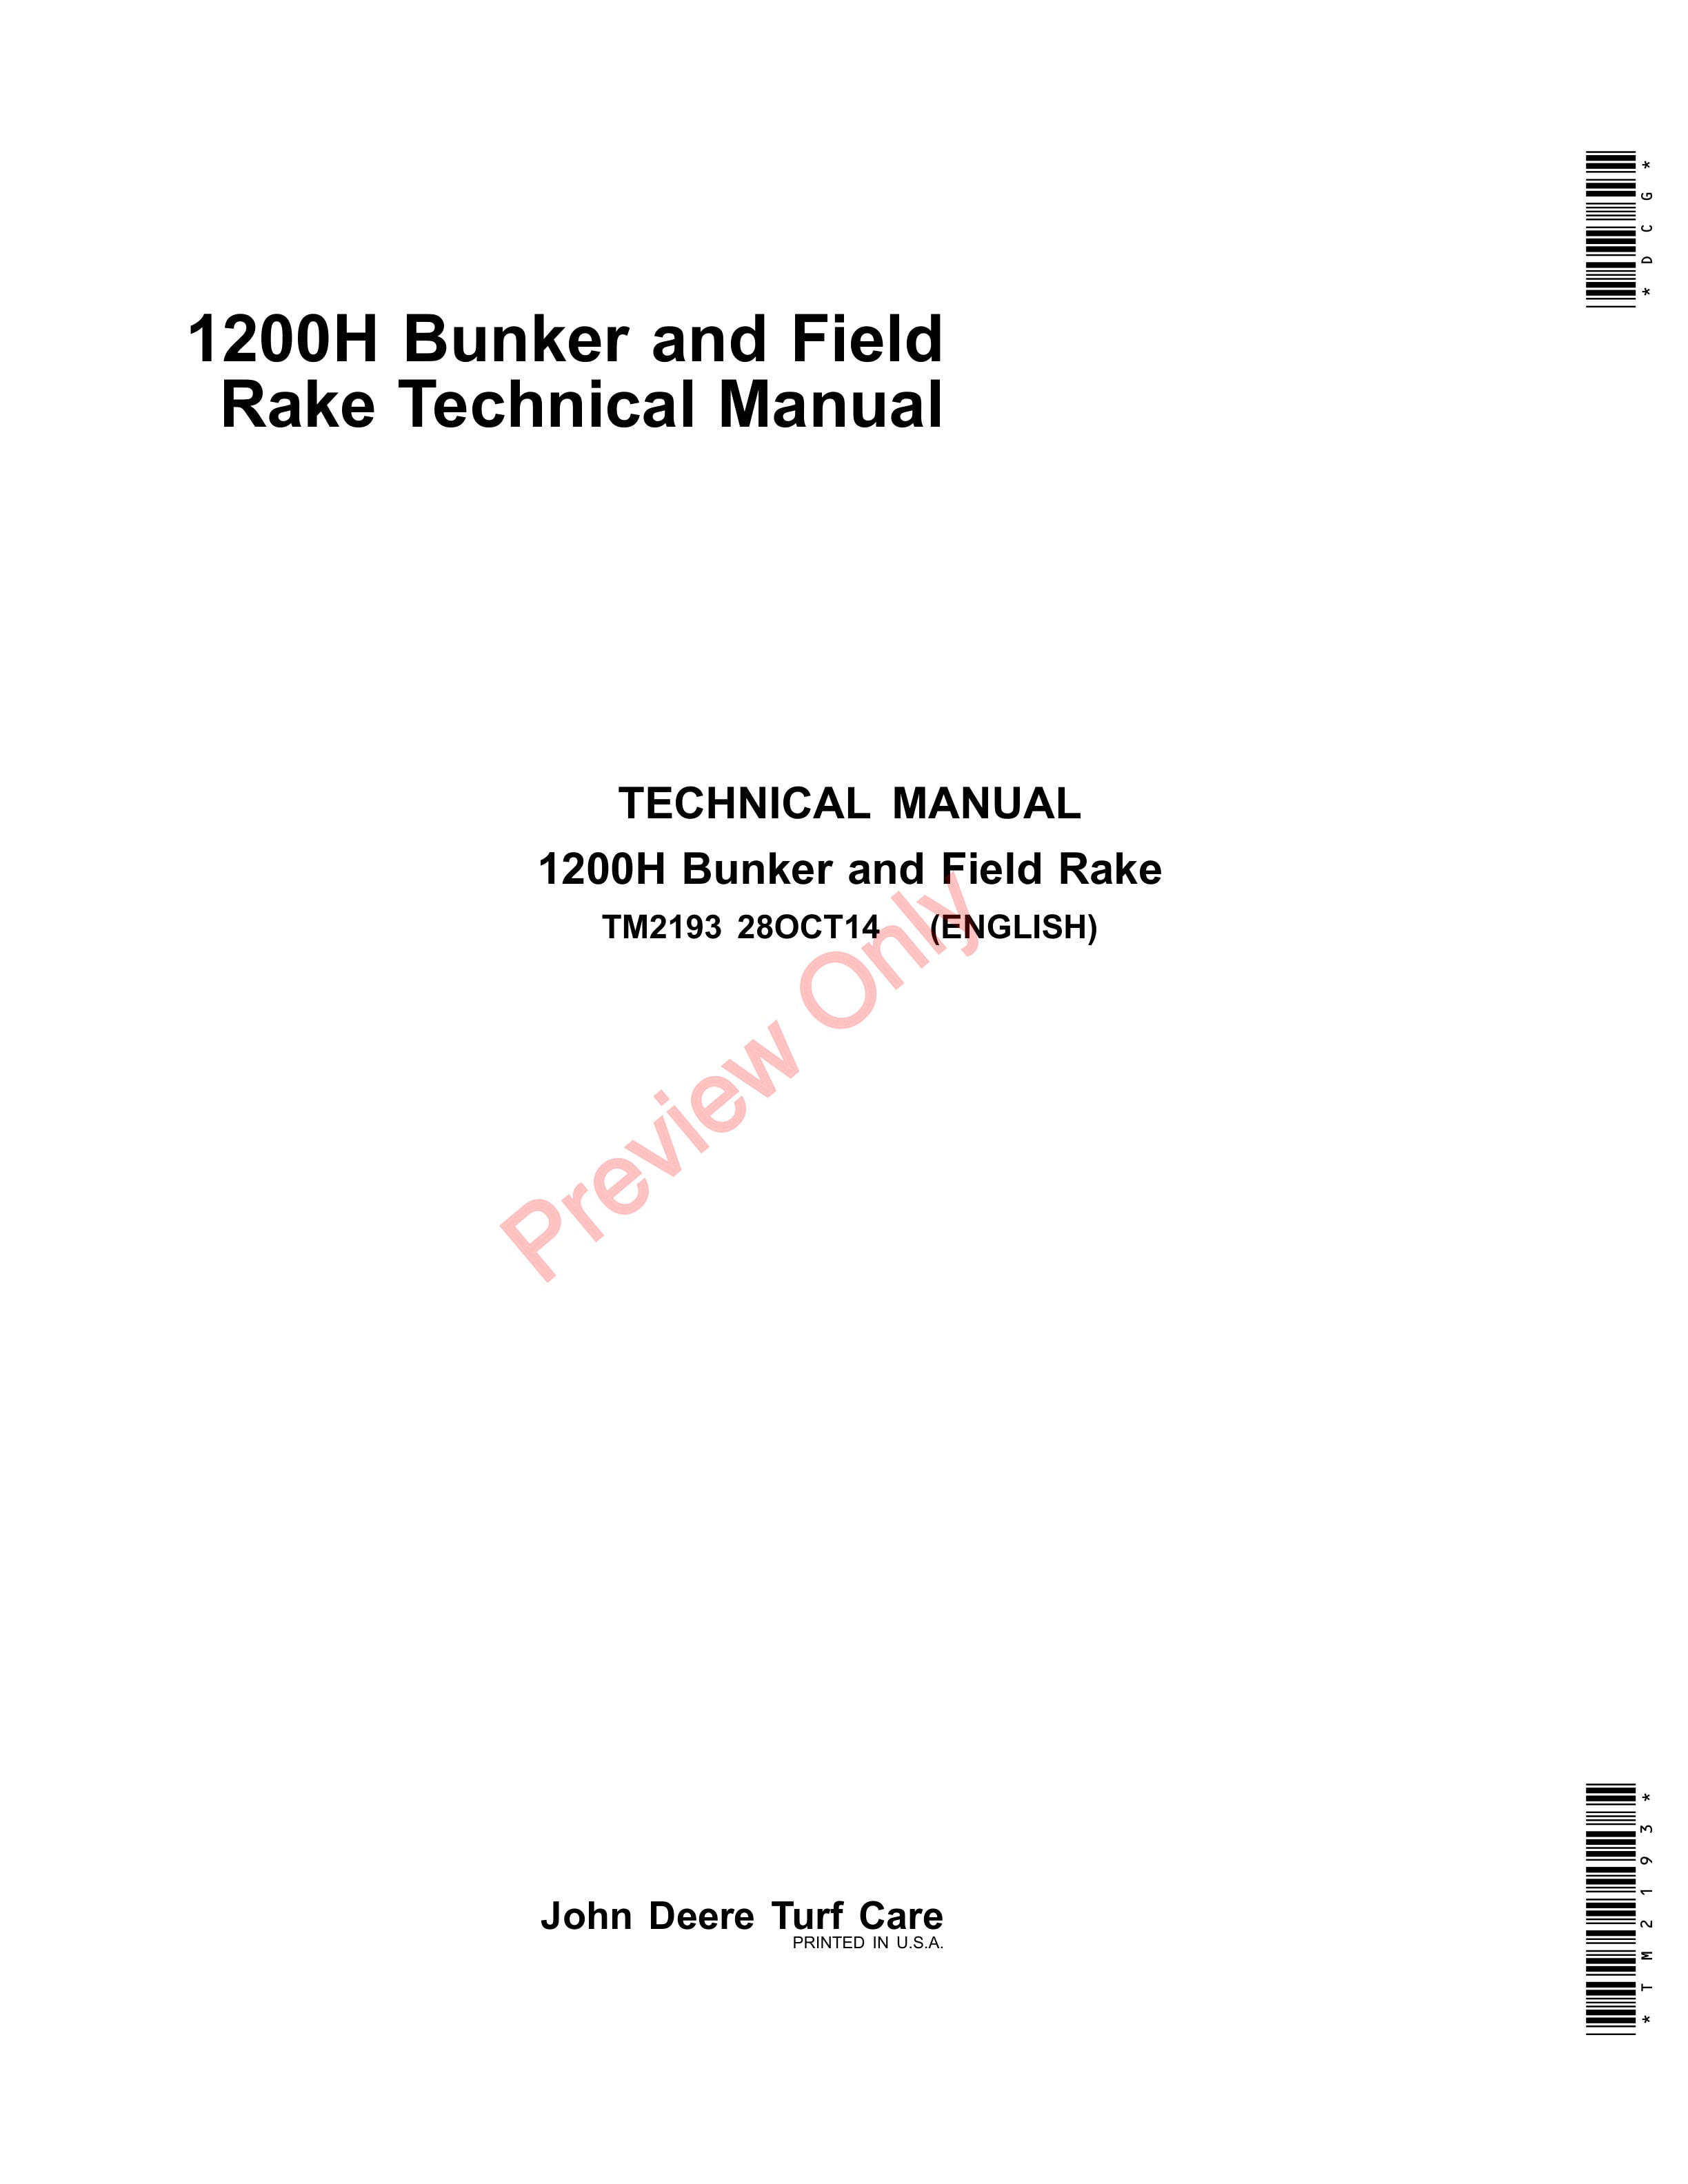 John Deere 1200H Bunker and Field Rake Technical Manual TM2193 28OCT14 1